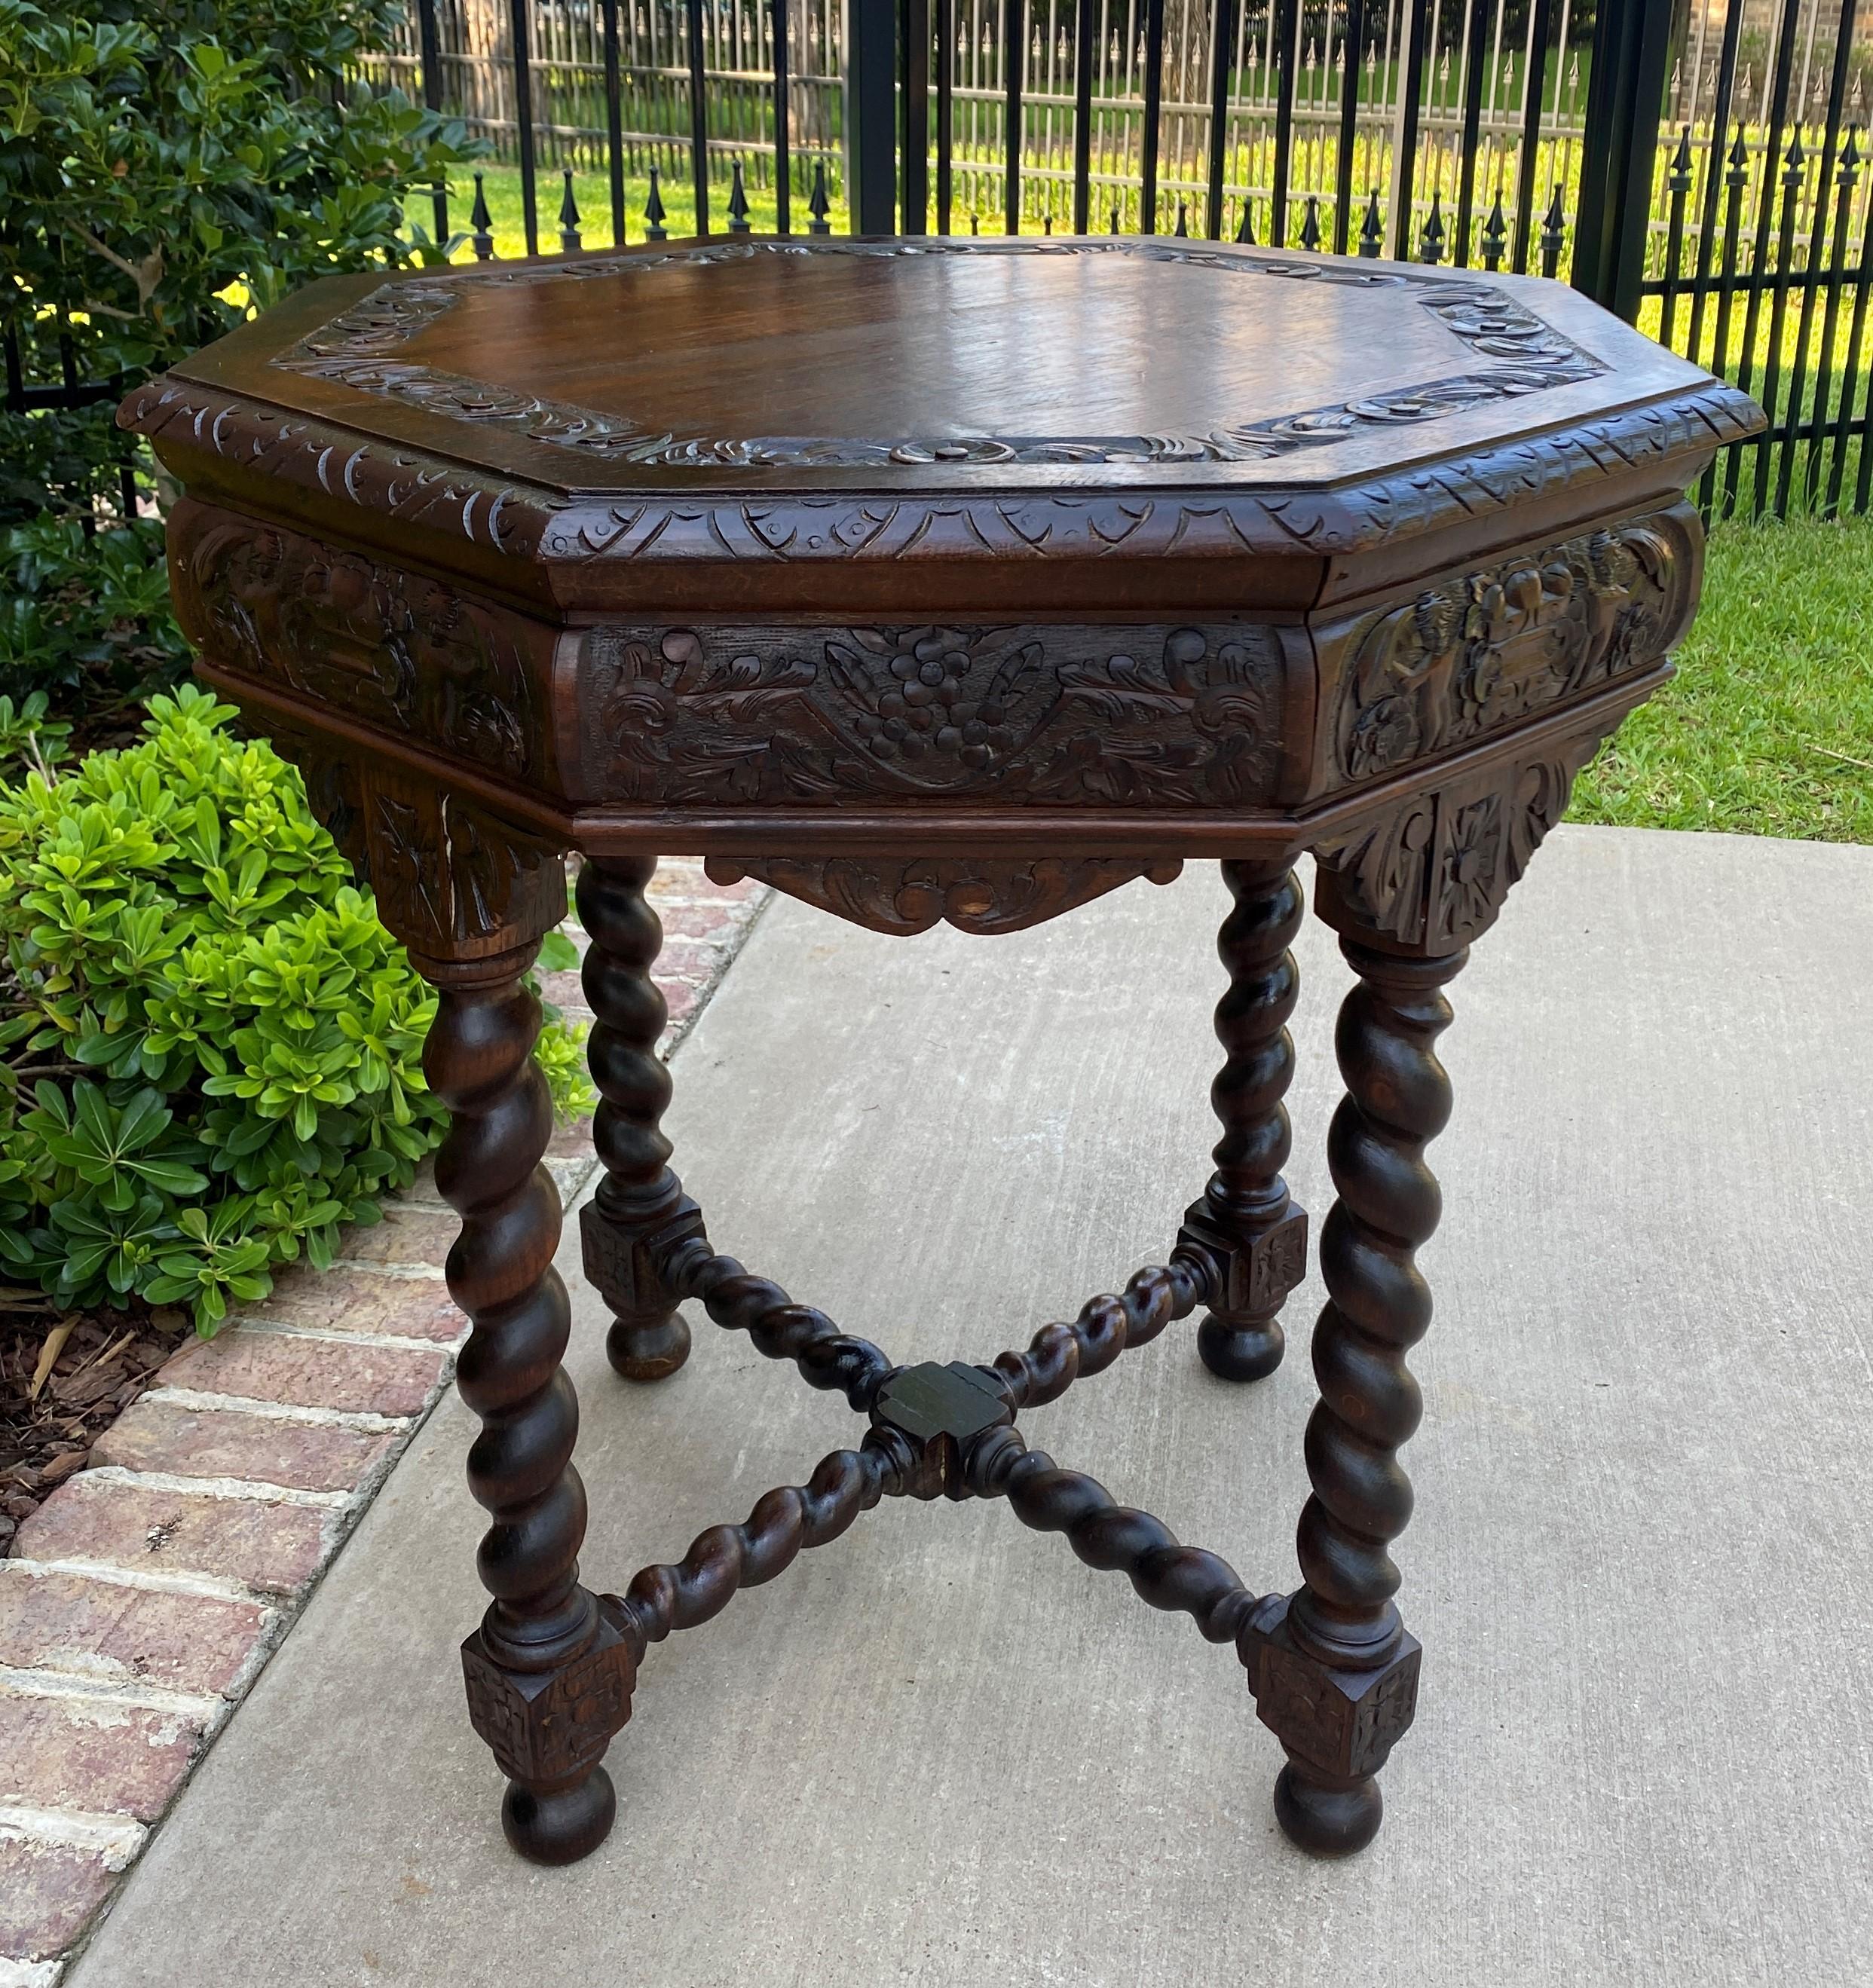 Antique French Table Barley Twist Octagonal Renaissance Revival Carved Oak 19thC 4